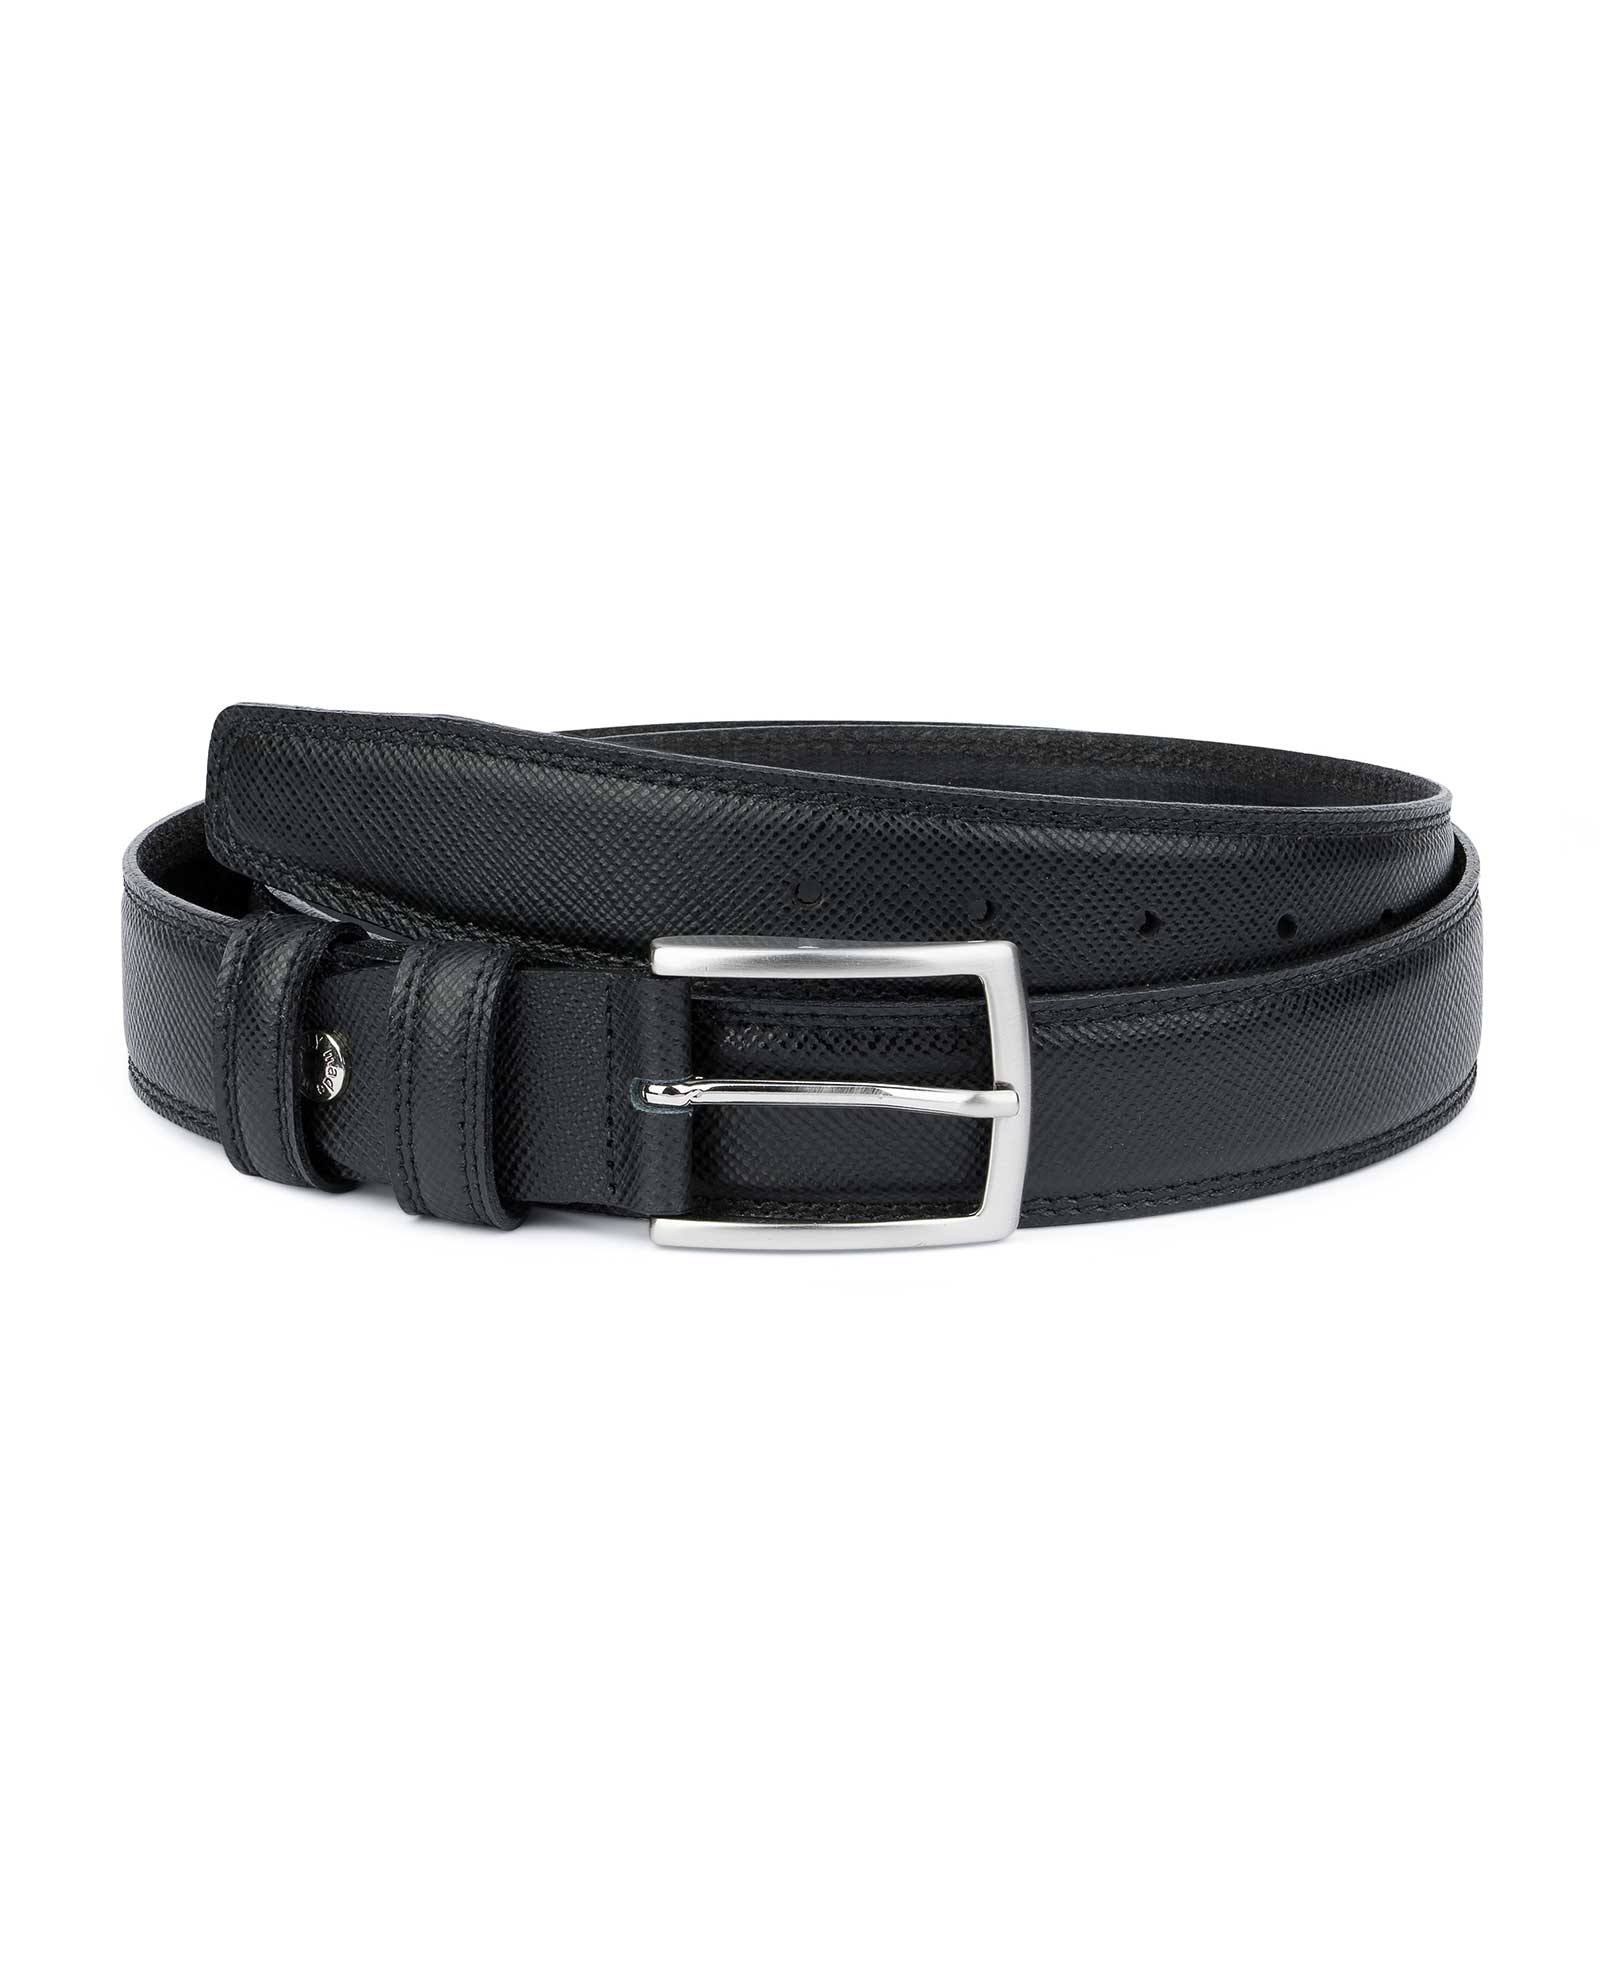 Buy Saffiano Black Leather Belt | Men's Dress | LeatherBeltsOnline.com